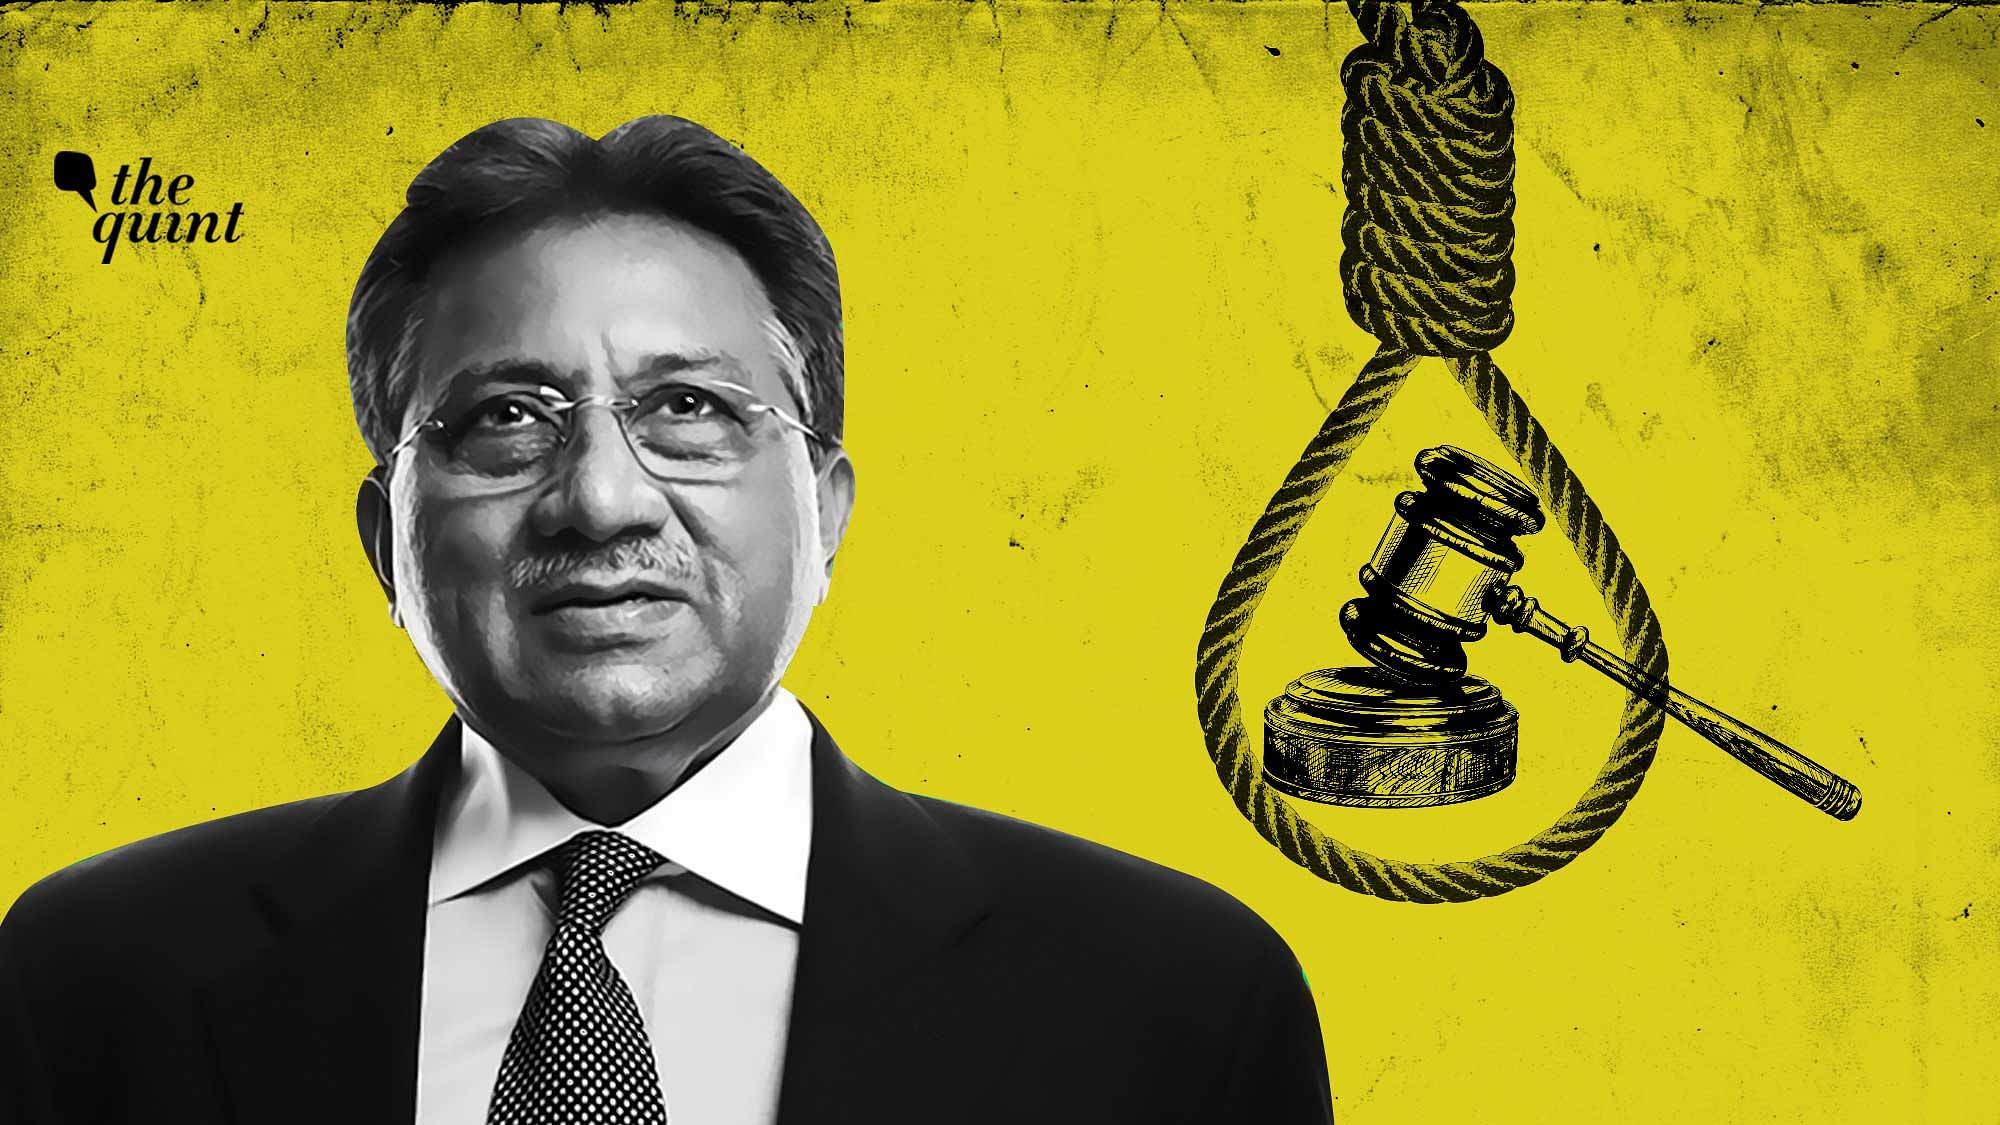 Image of former Pakistan President General Pervez Musharraf used for representational purposes.